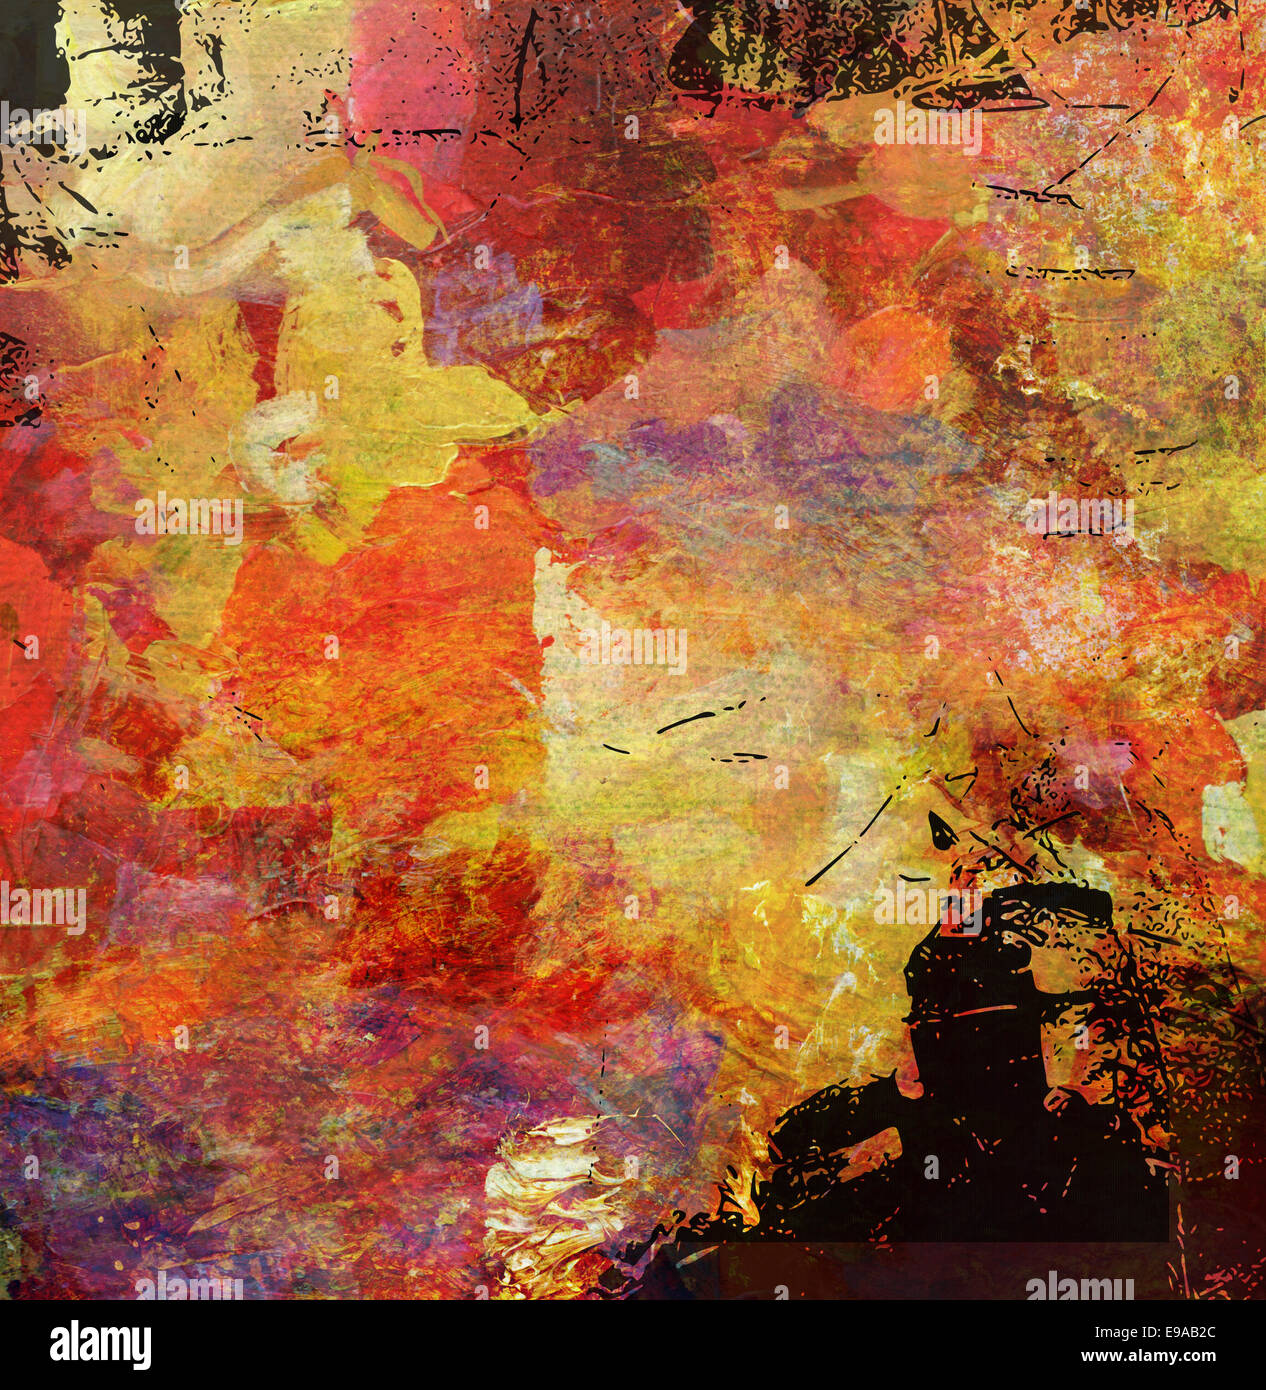 abstract artwork - mixed media grunge Stock Photo - Alamy